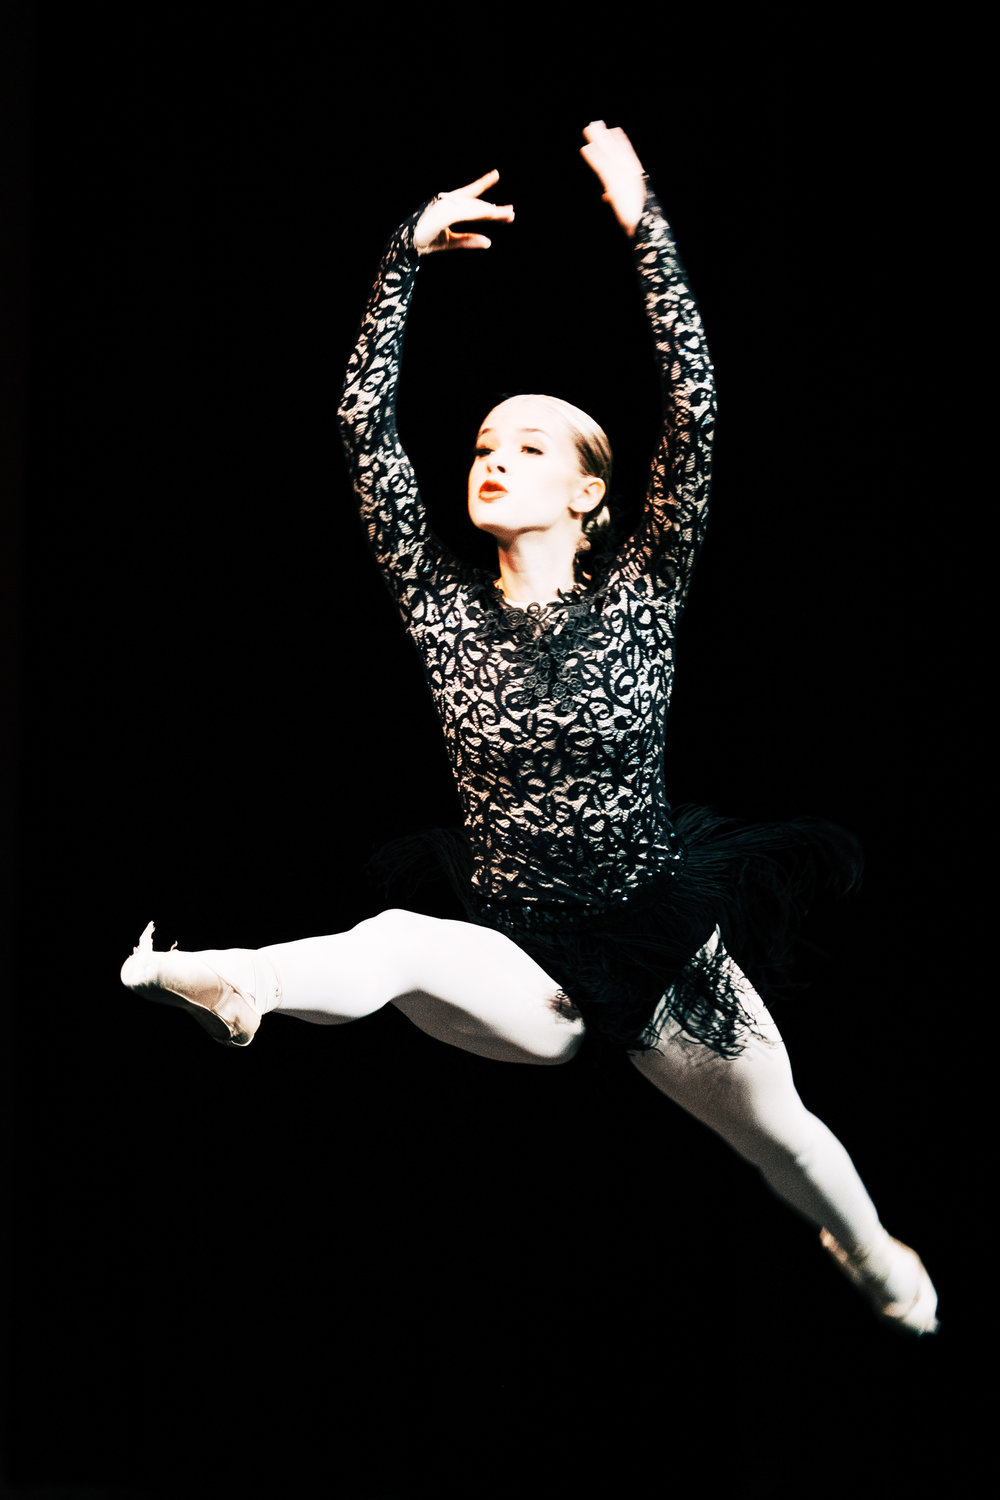 Mallory Womeldorff performs “Carmen” as choreographed by Elvira Karavaeva as part of Pittsburg Ballet’s Spring Showcase on Thursday.